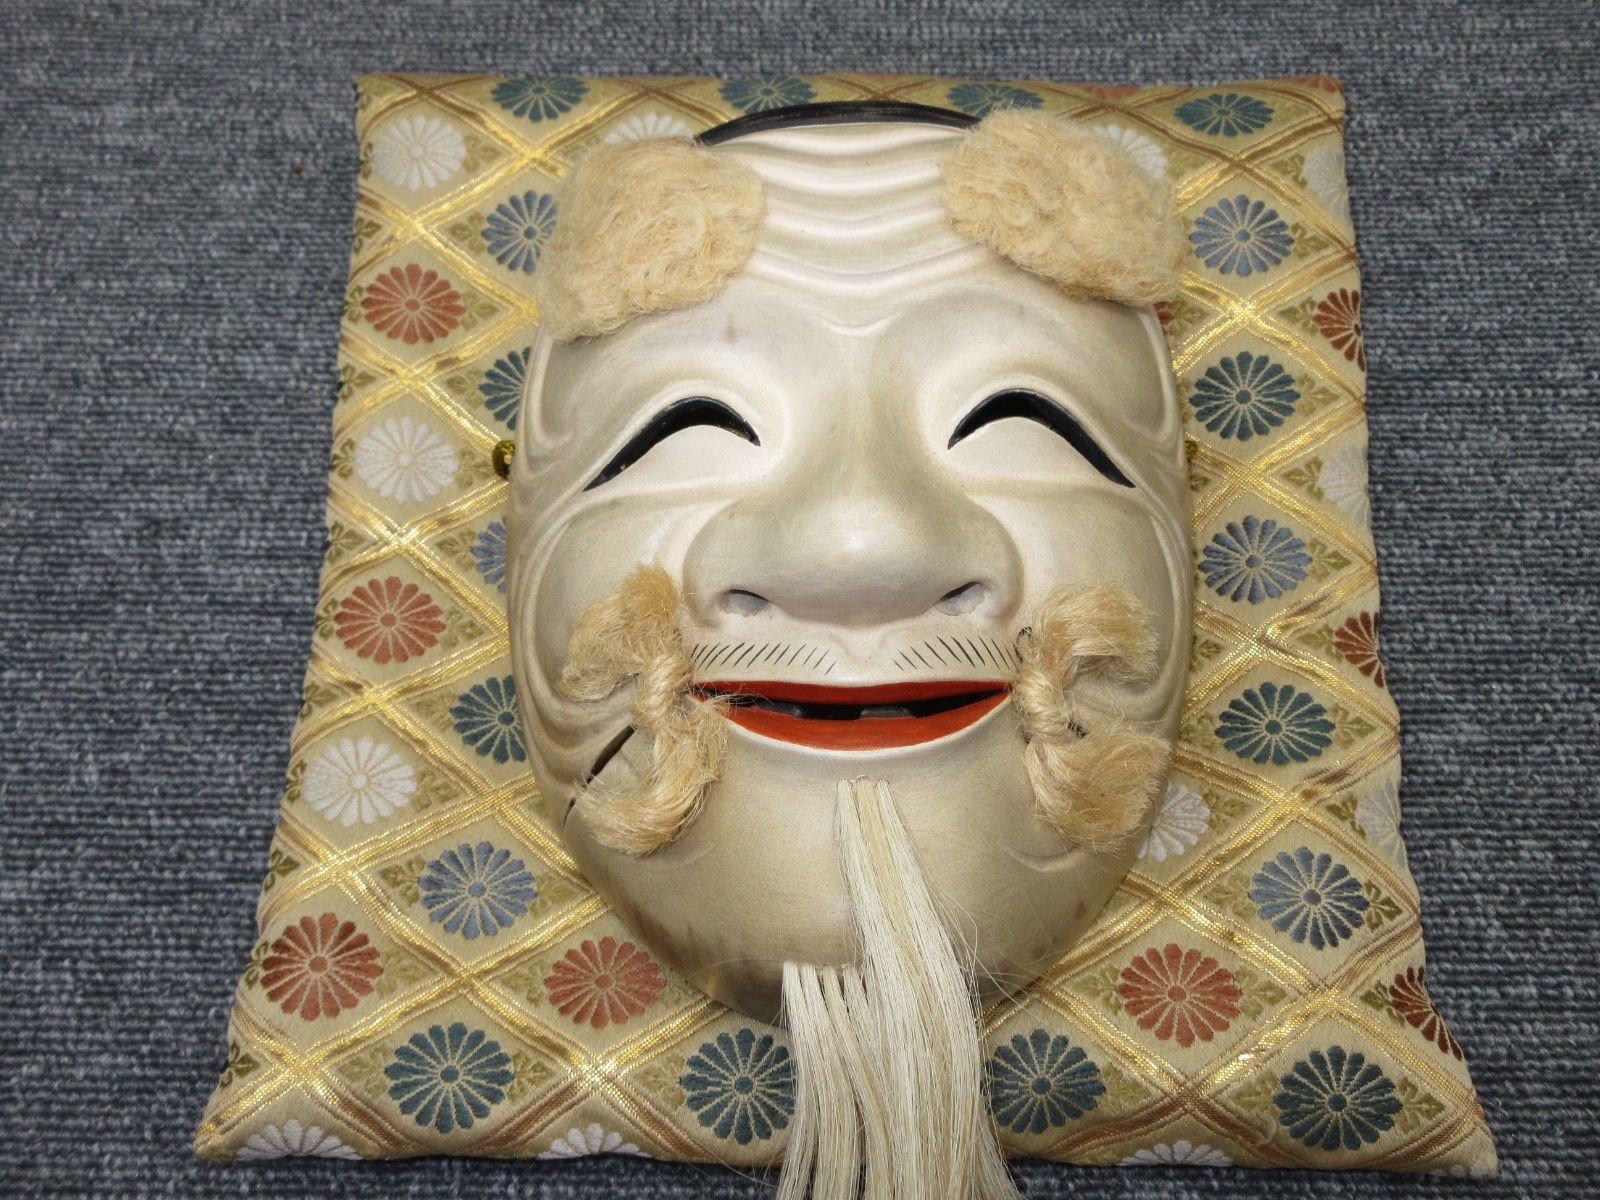 木彫り能面 翁面 狂言面 神楽面 伝統芸能 日本舞踊 アンティーク 